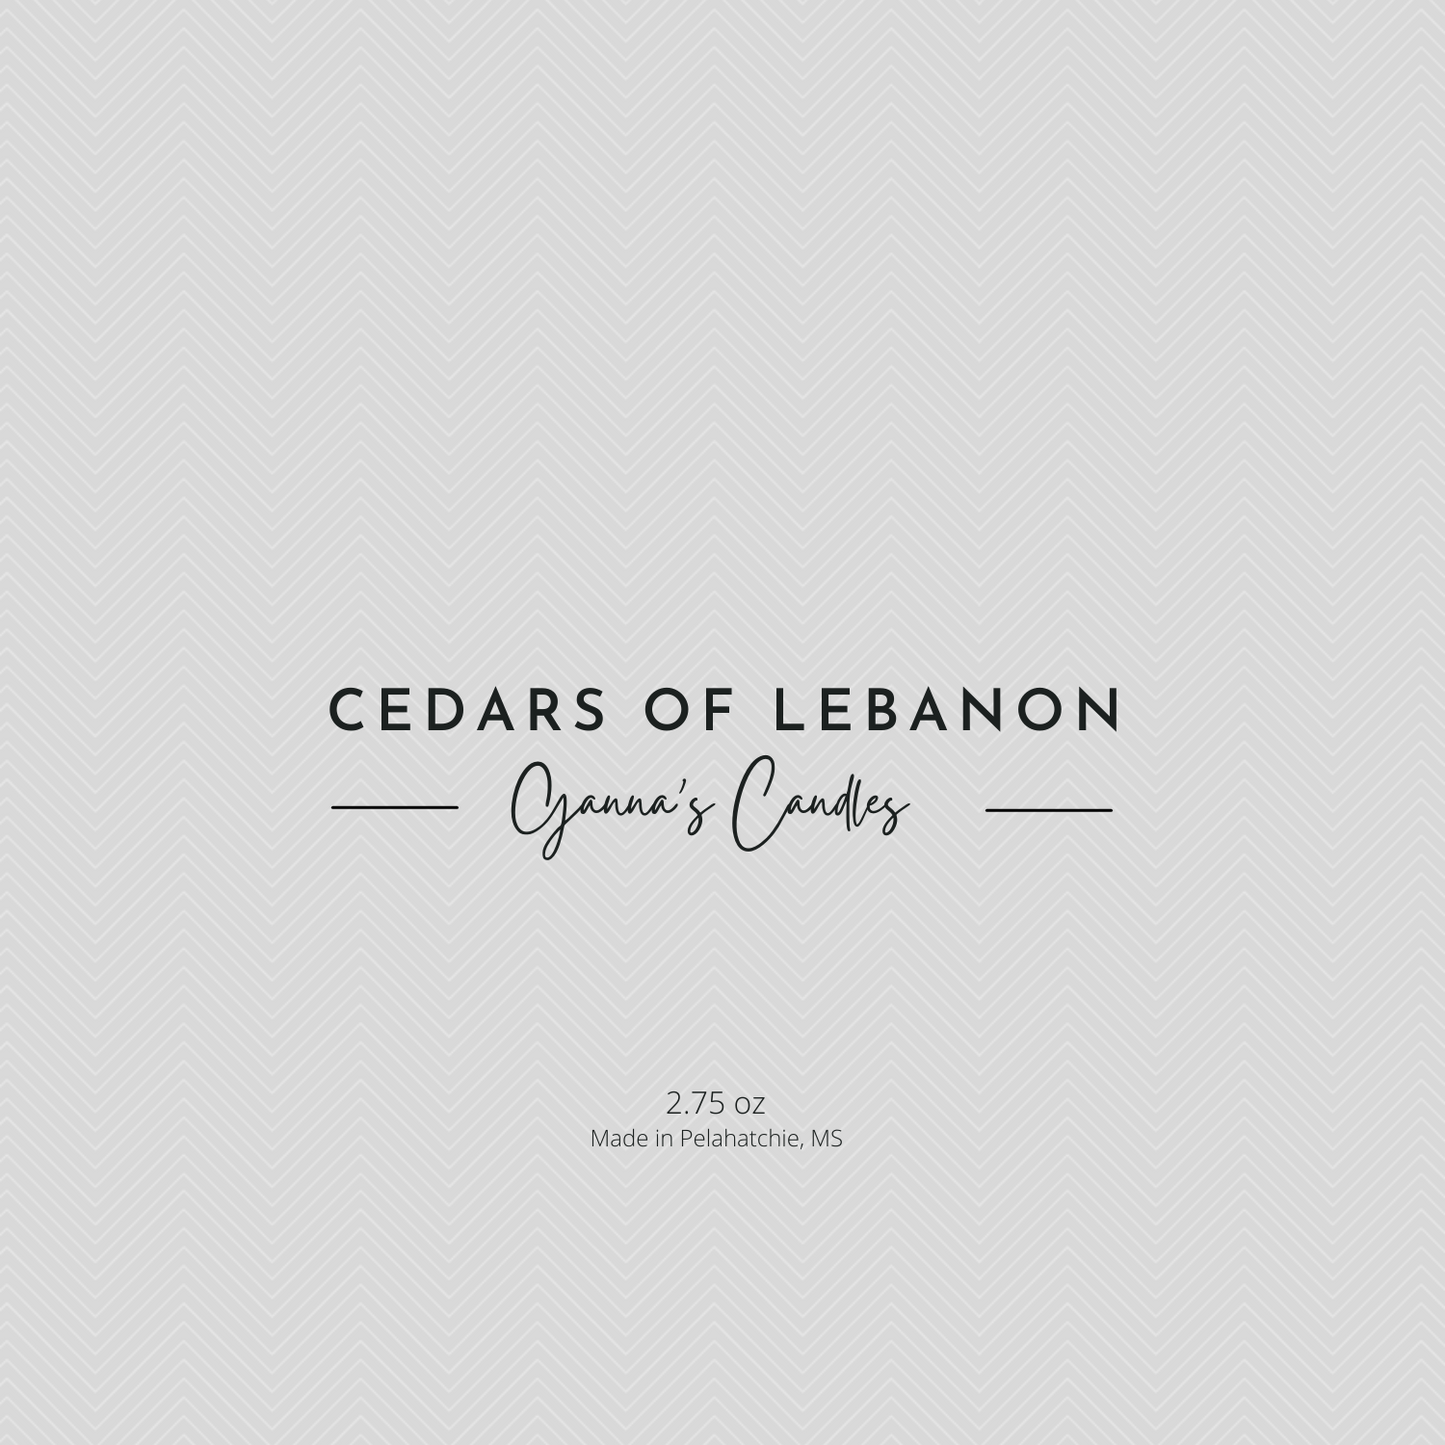 Cedars of Lebanon Melts